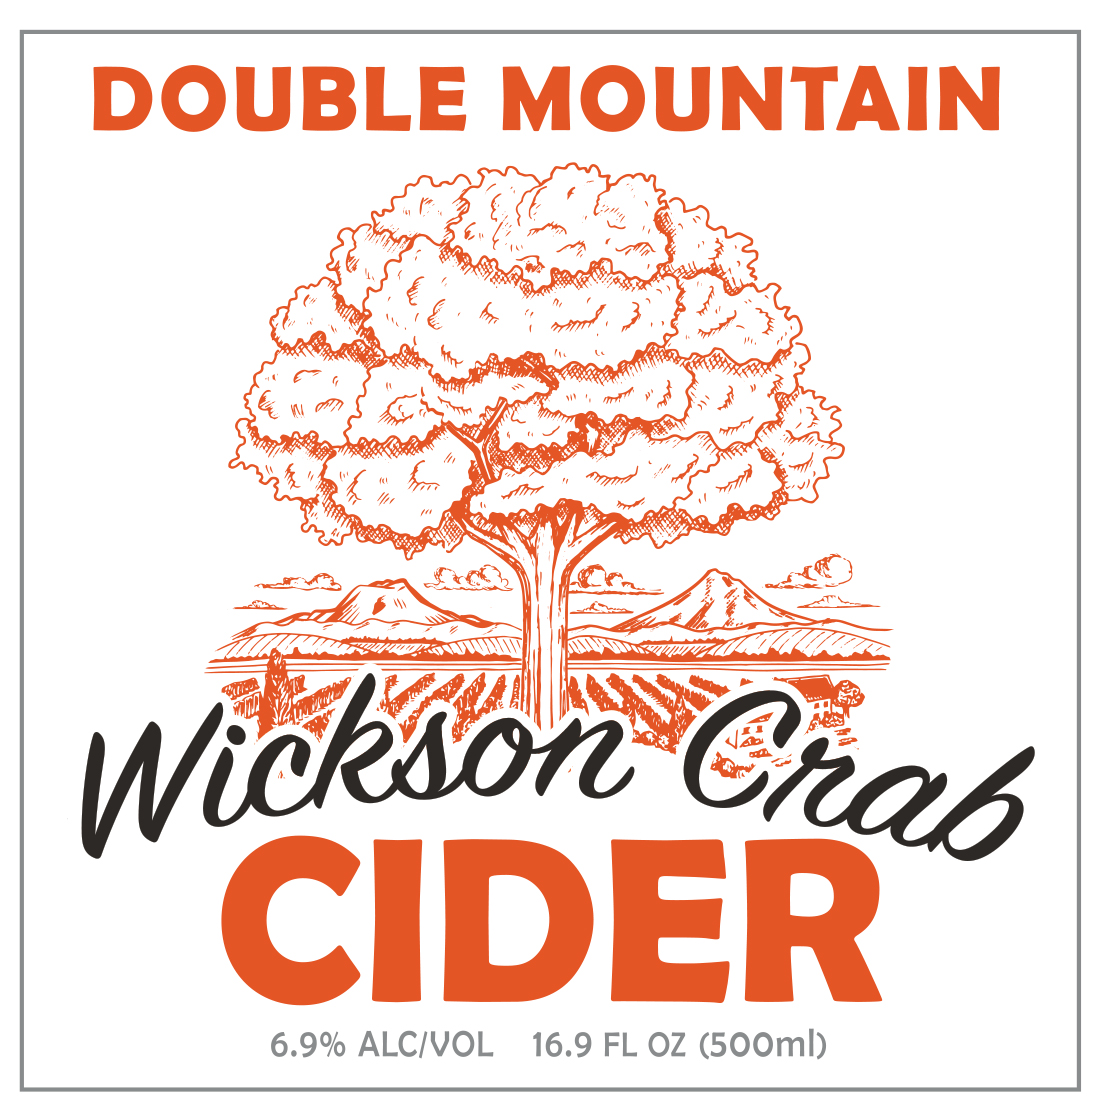 Double Mountain Wickson Crab Cider